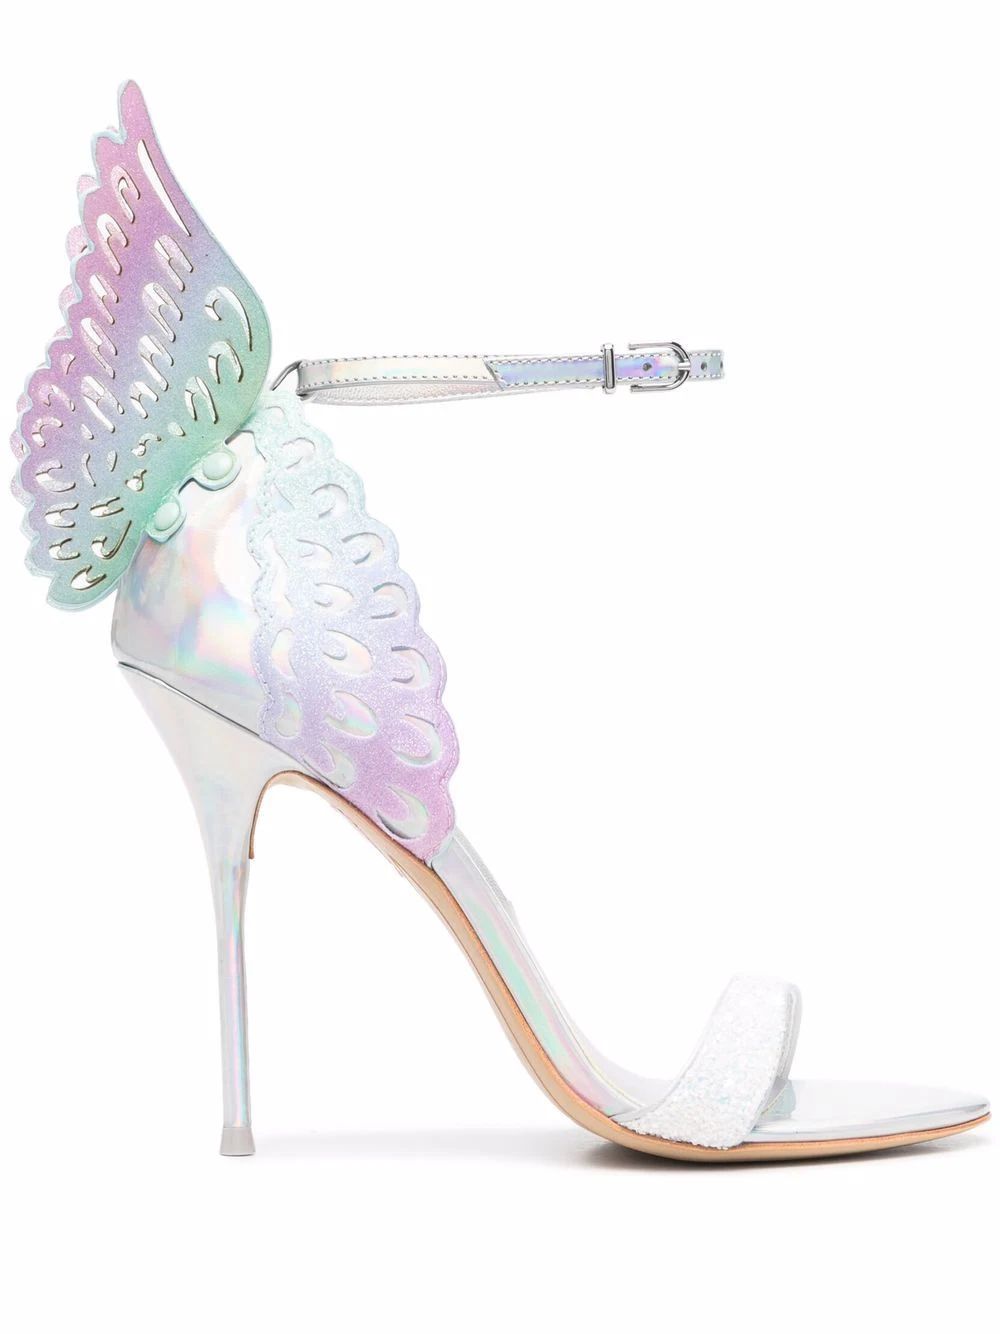 Evangeline holographic stiletto sandals | Farfetch Global